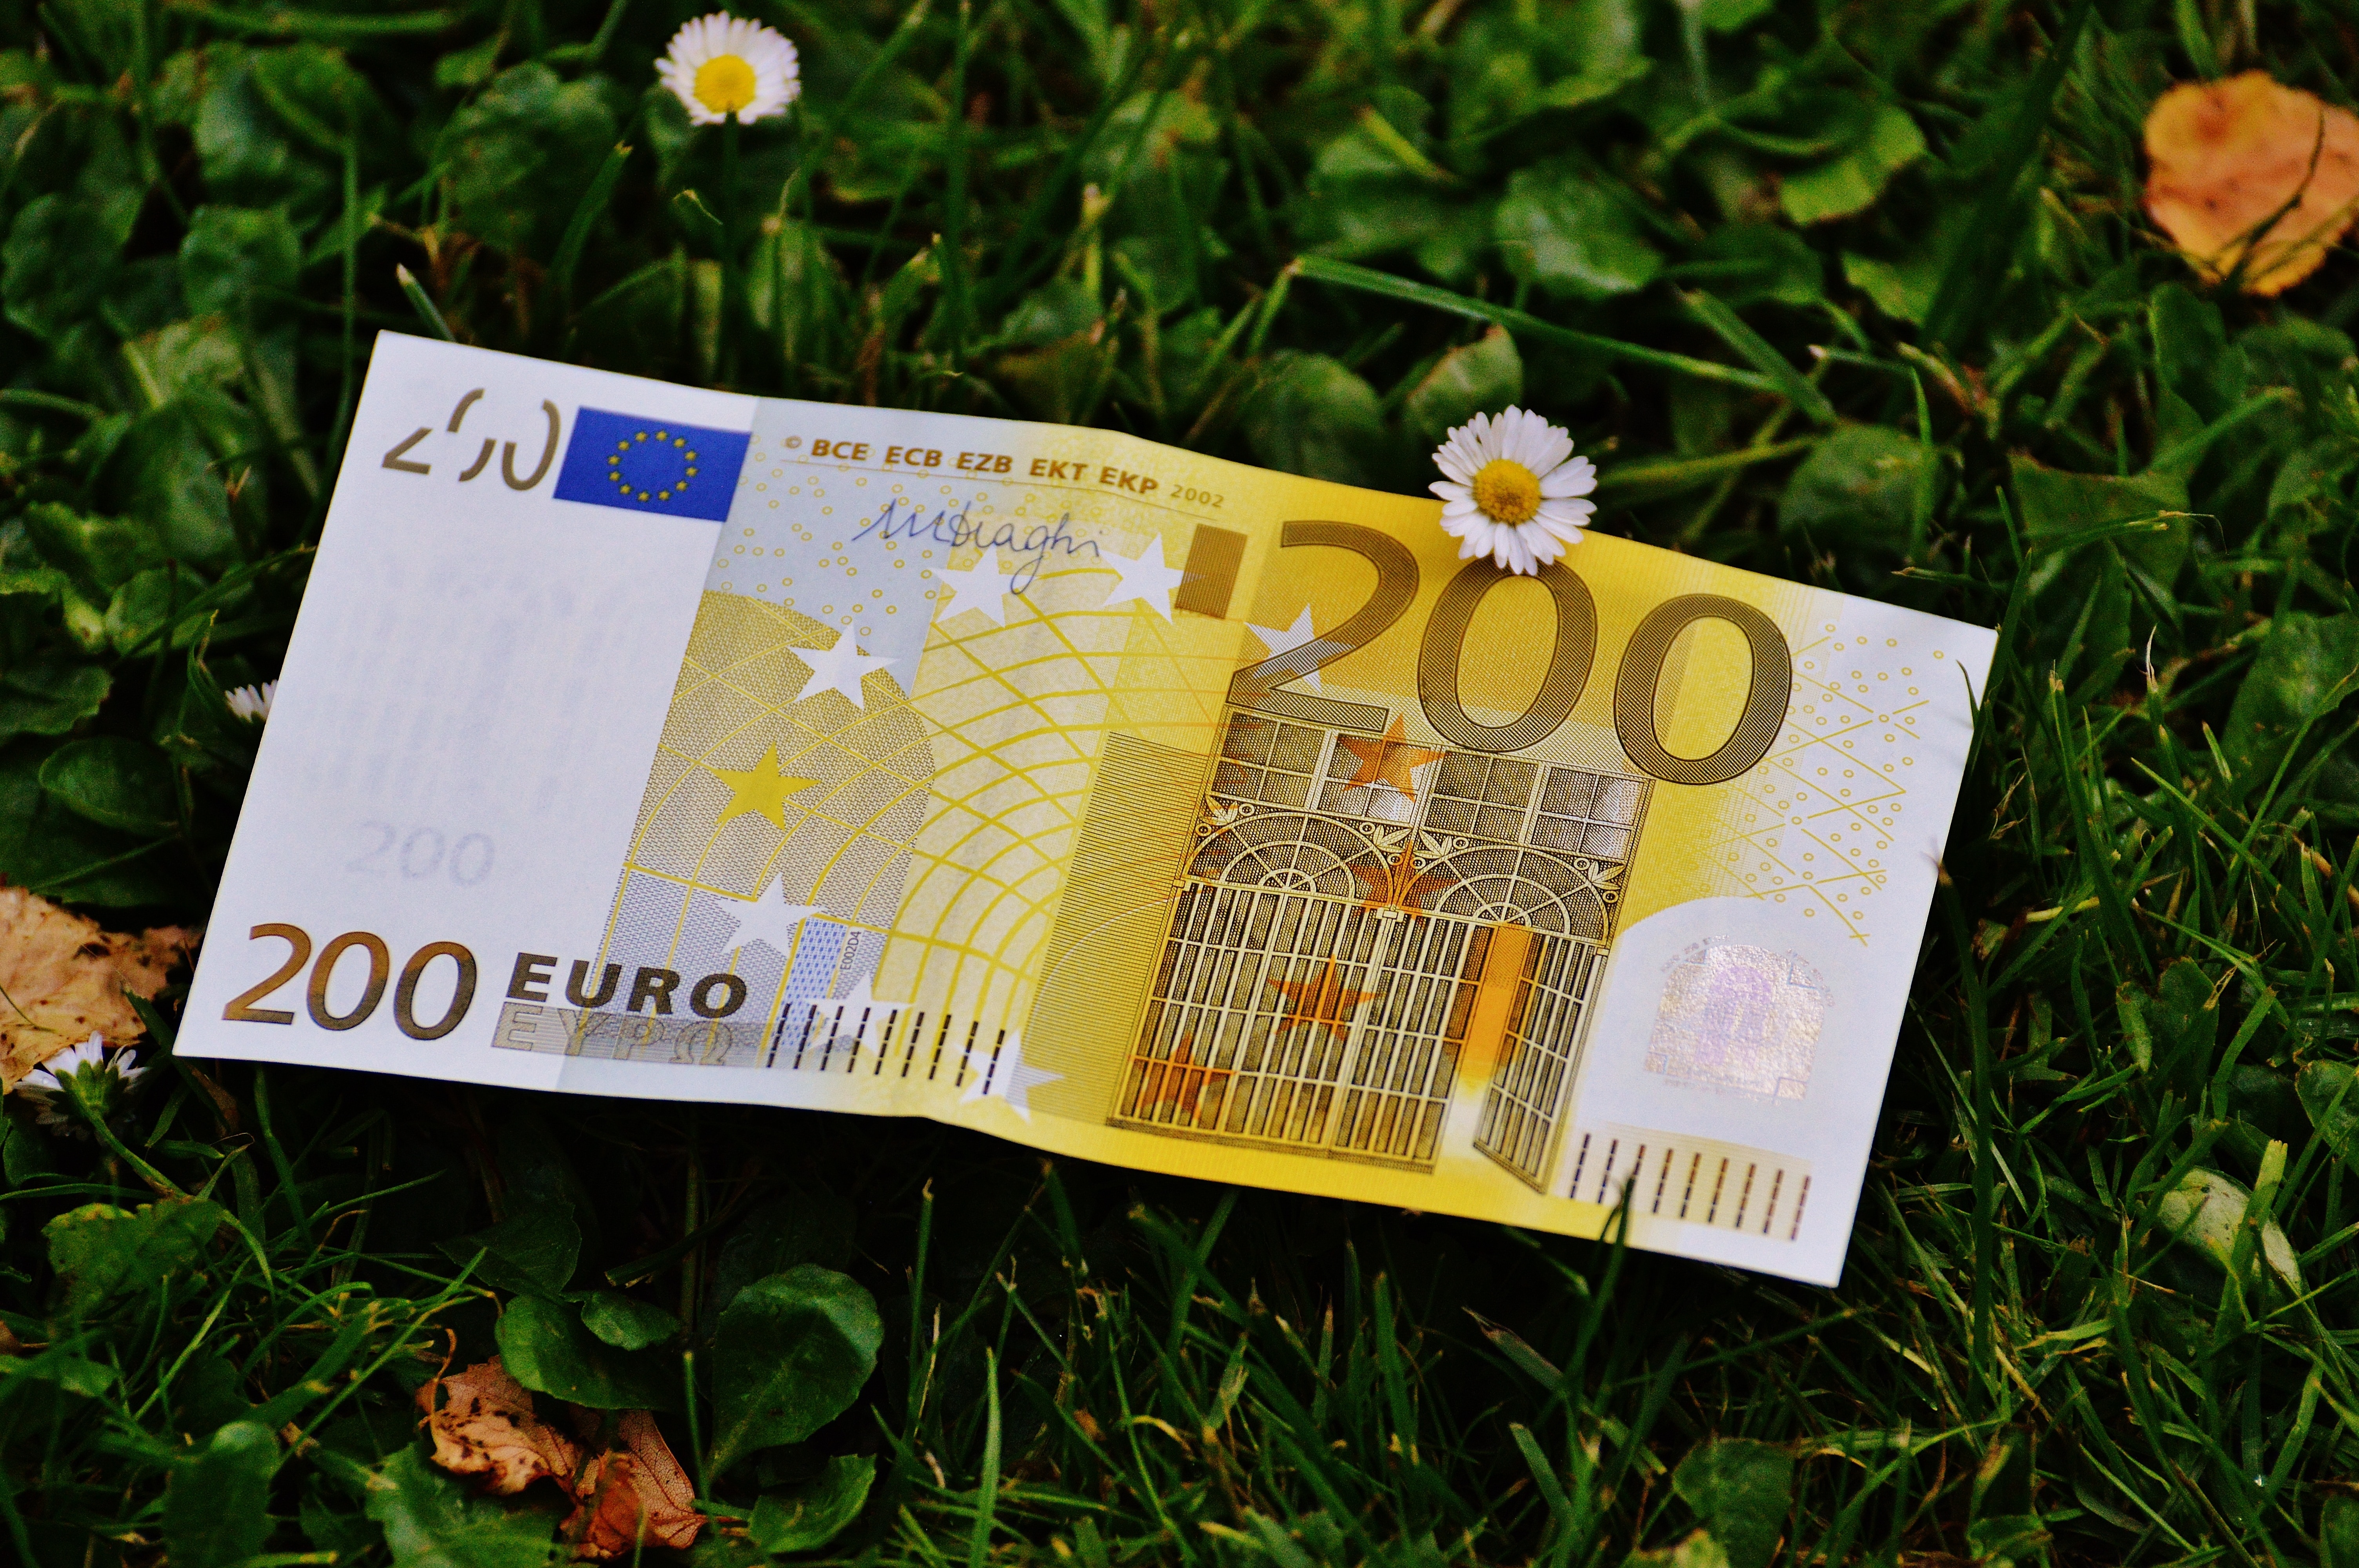 200 euro banknote